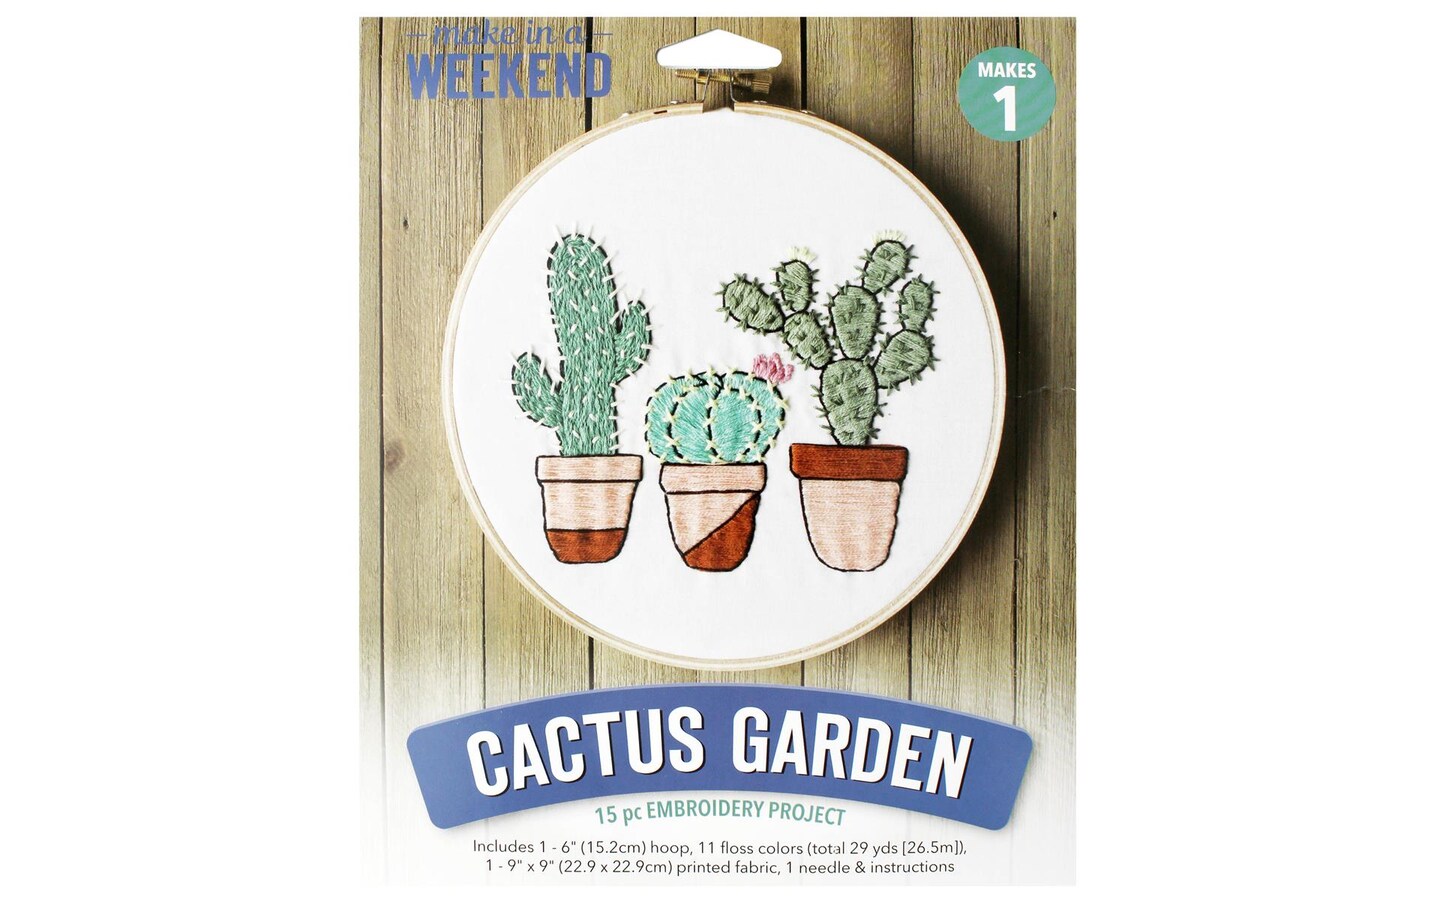 Leisure Arts Embroidery Kit 6 Cactus Garden- embroidery kit for beginners  - embroidery kit for adults - cross stitch kits - cross stitch kits for